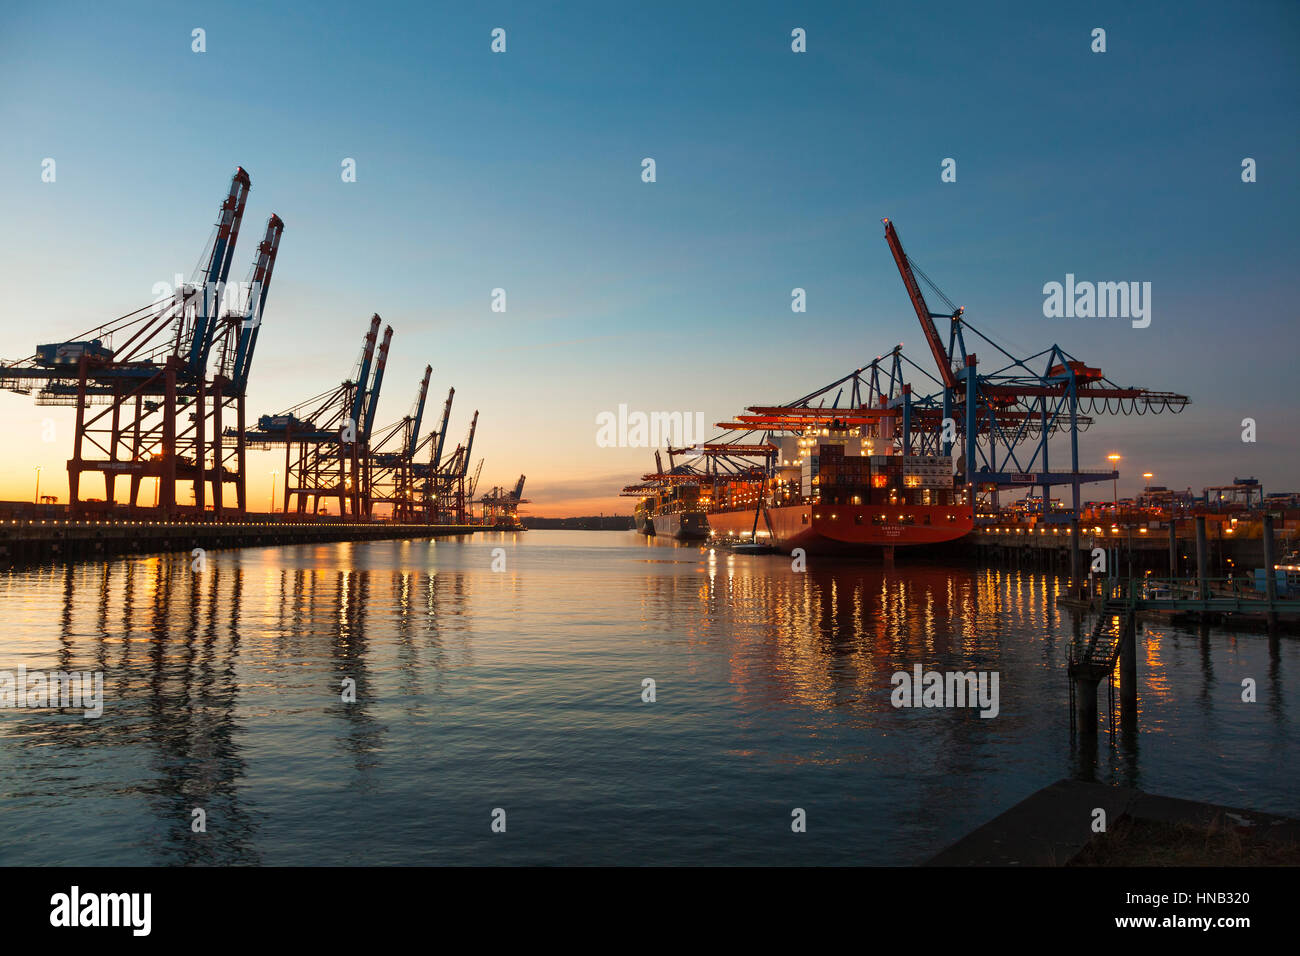 Hamburg, Germany - November 24, 2016: Container terminals at the port of Hamburg, large container ships moored at Burchardkai. Stock Photo